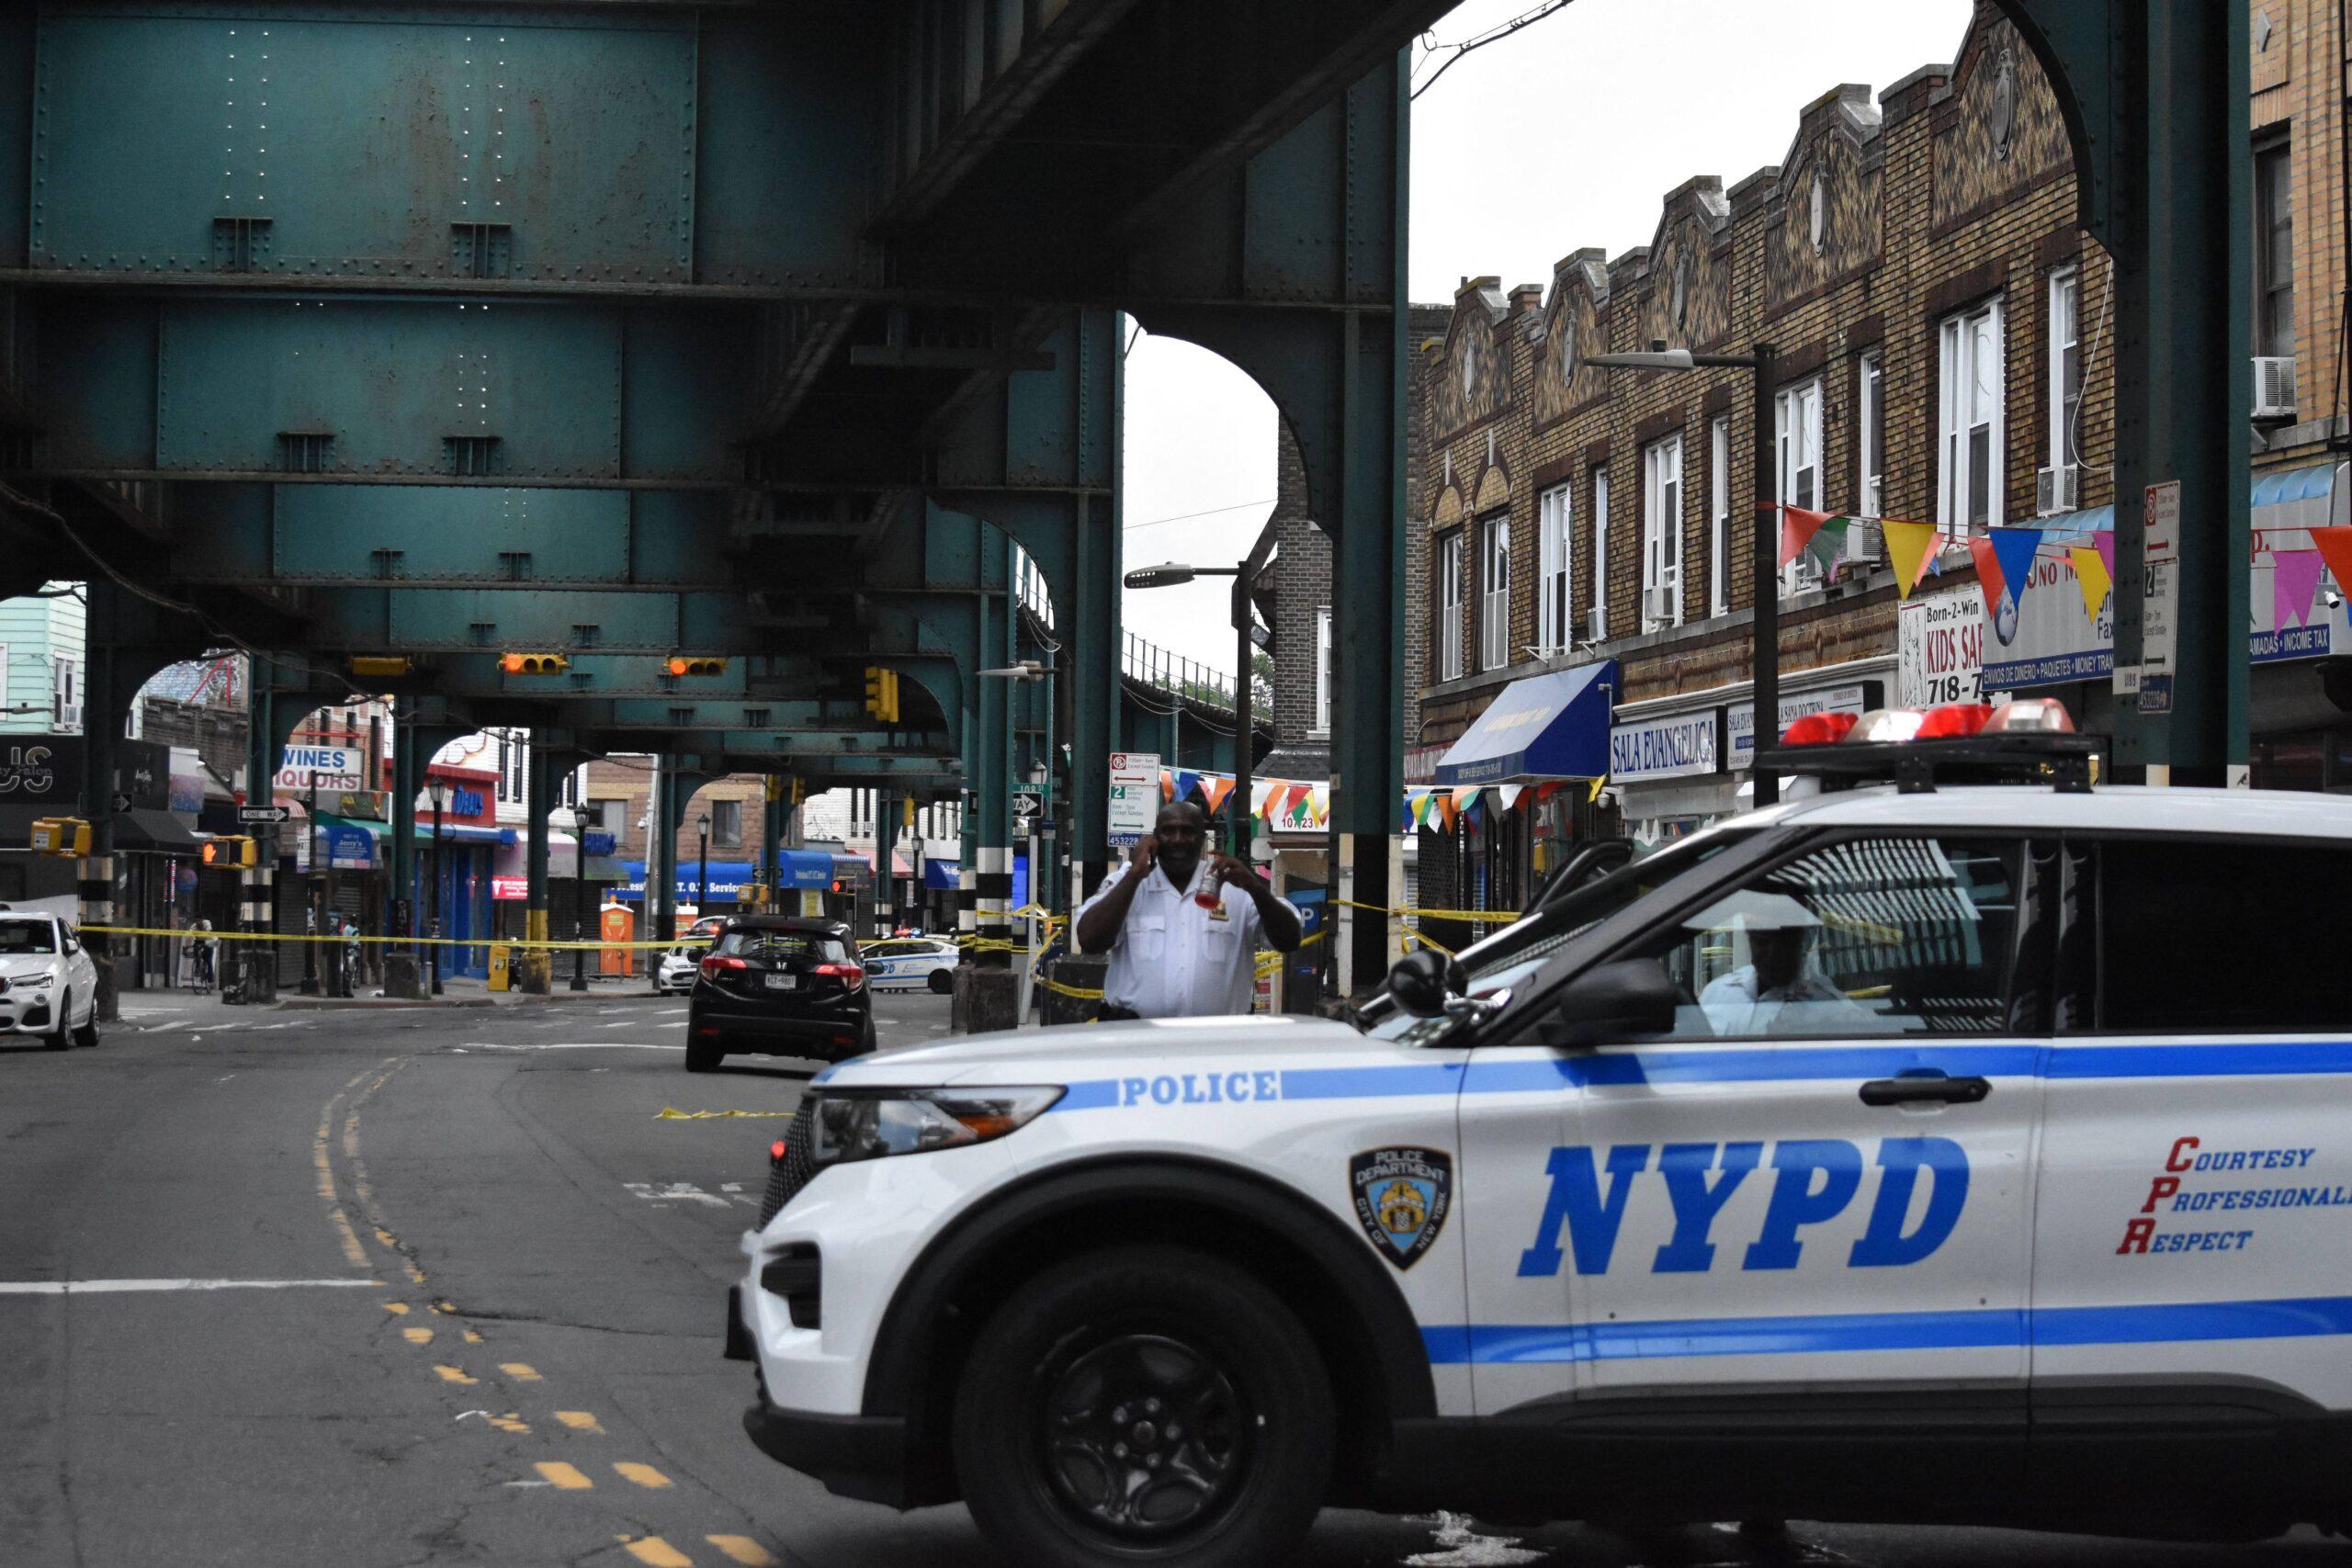 An NYPD police car arrives on scene